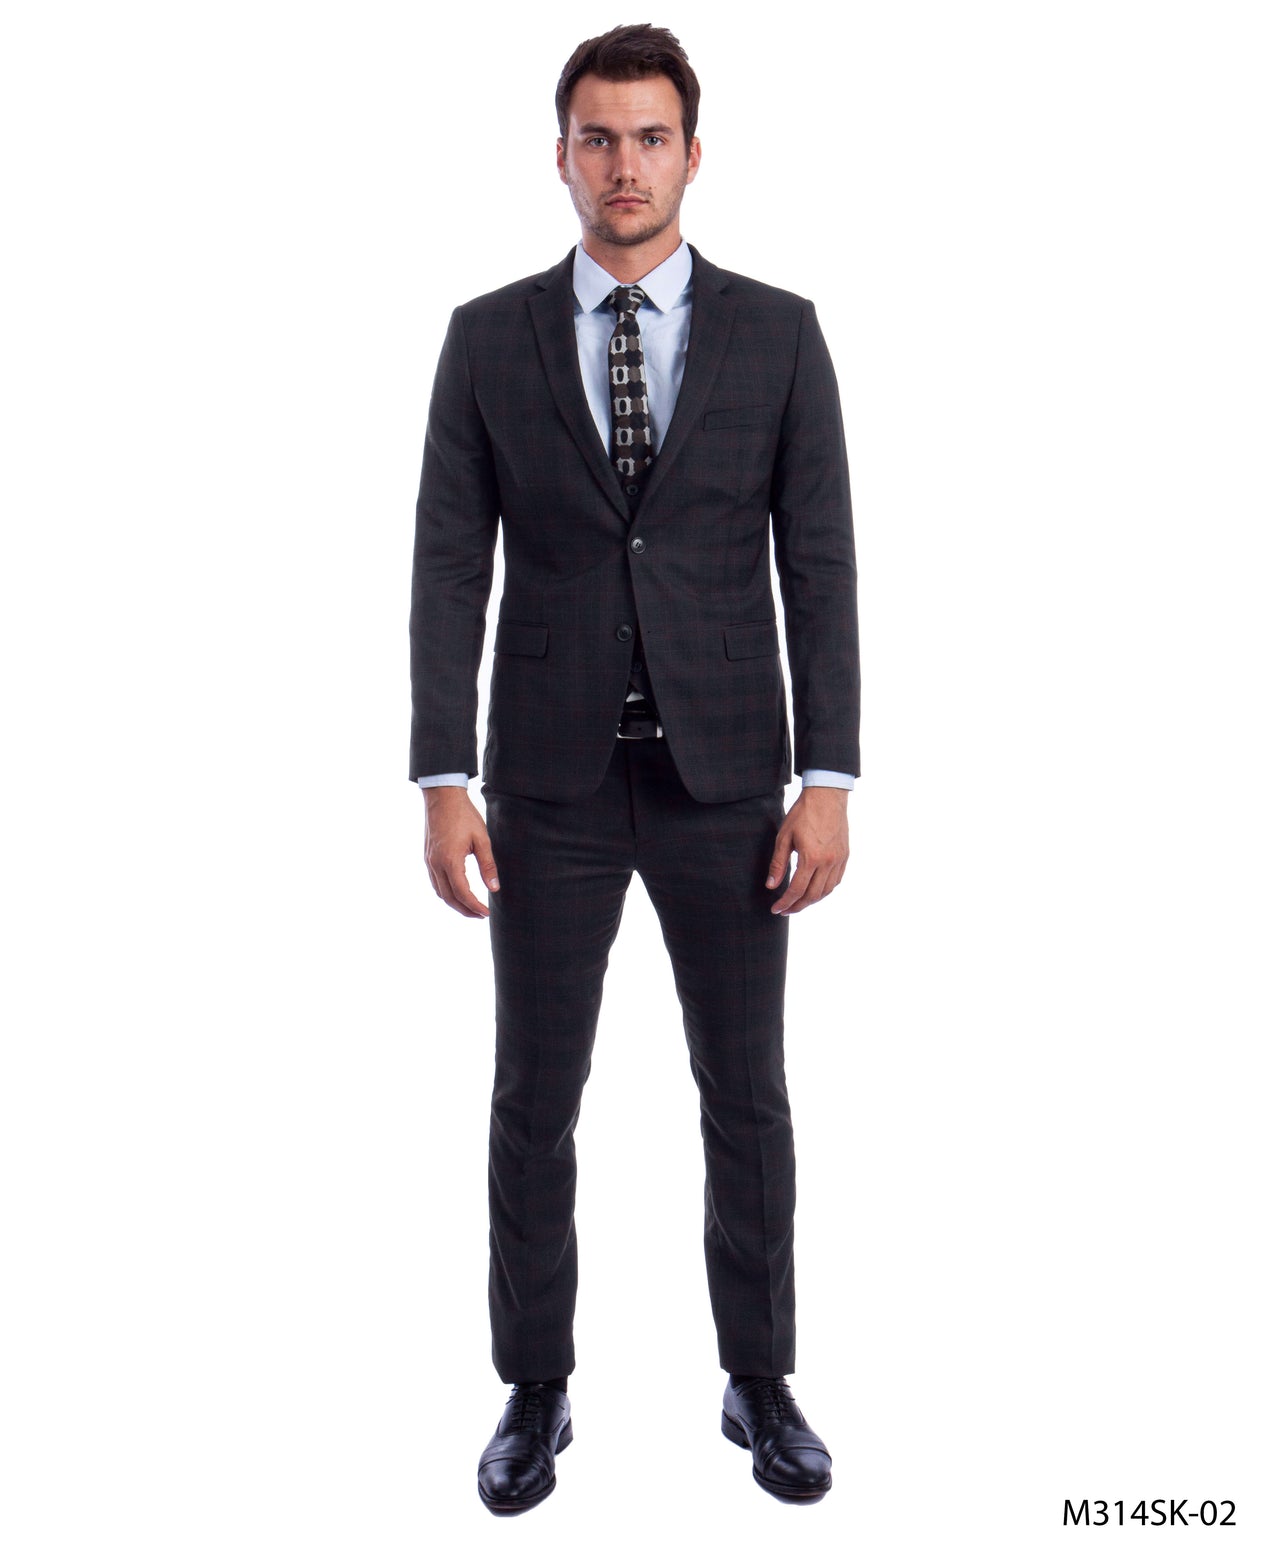 Black/Black Suit For Men Formal Suits For All Ocassions - Hattitude